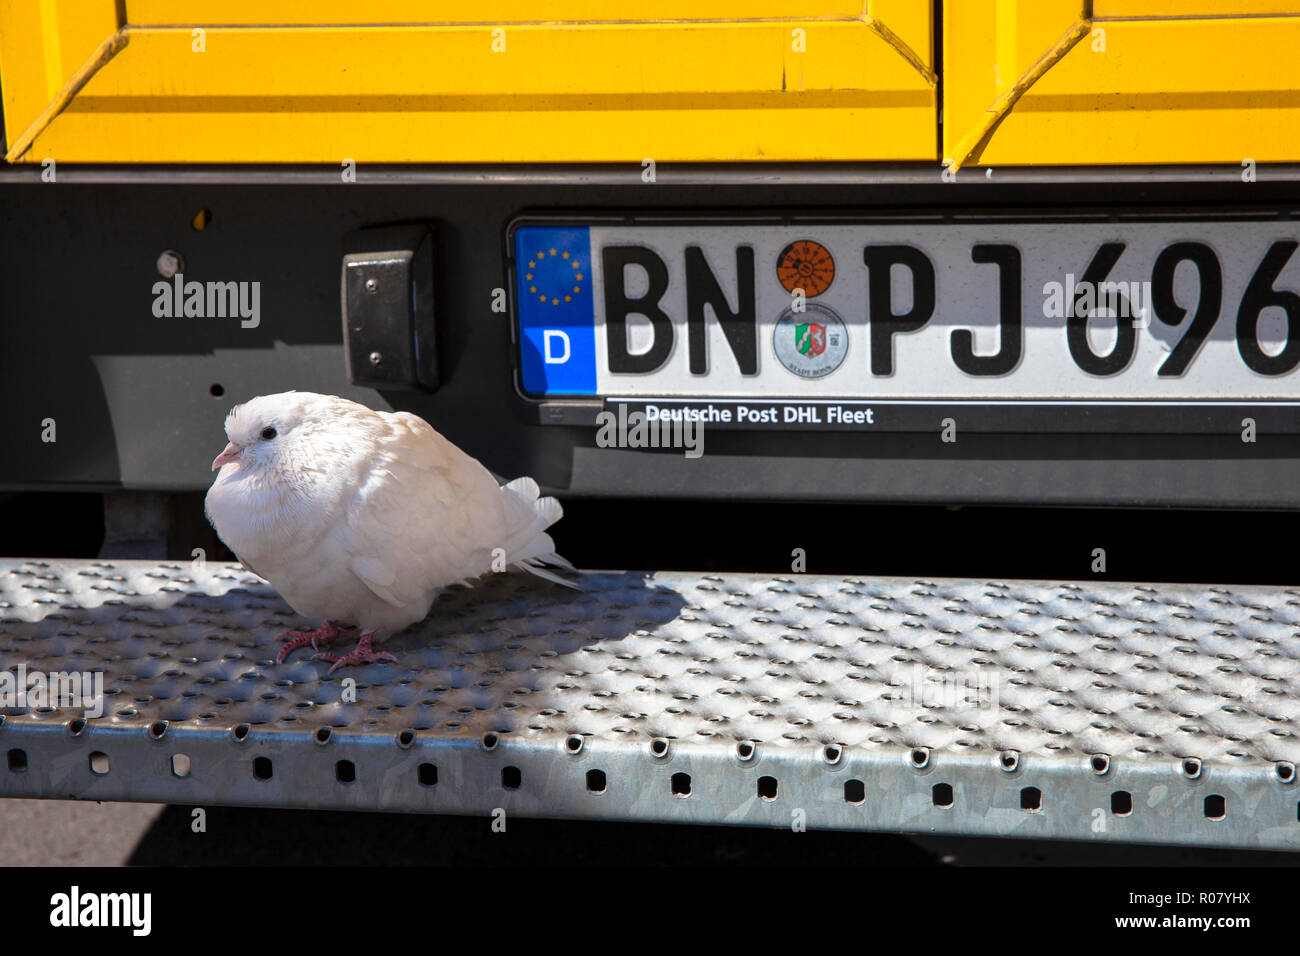 a white pigeon is sitting on the footboard of a DHL parcel service vehicle, Cologne, Germany.  eine weisse Taube sitzt auf dem Trittbrett eines DHL- F Stock Photo